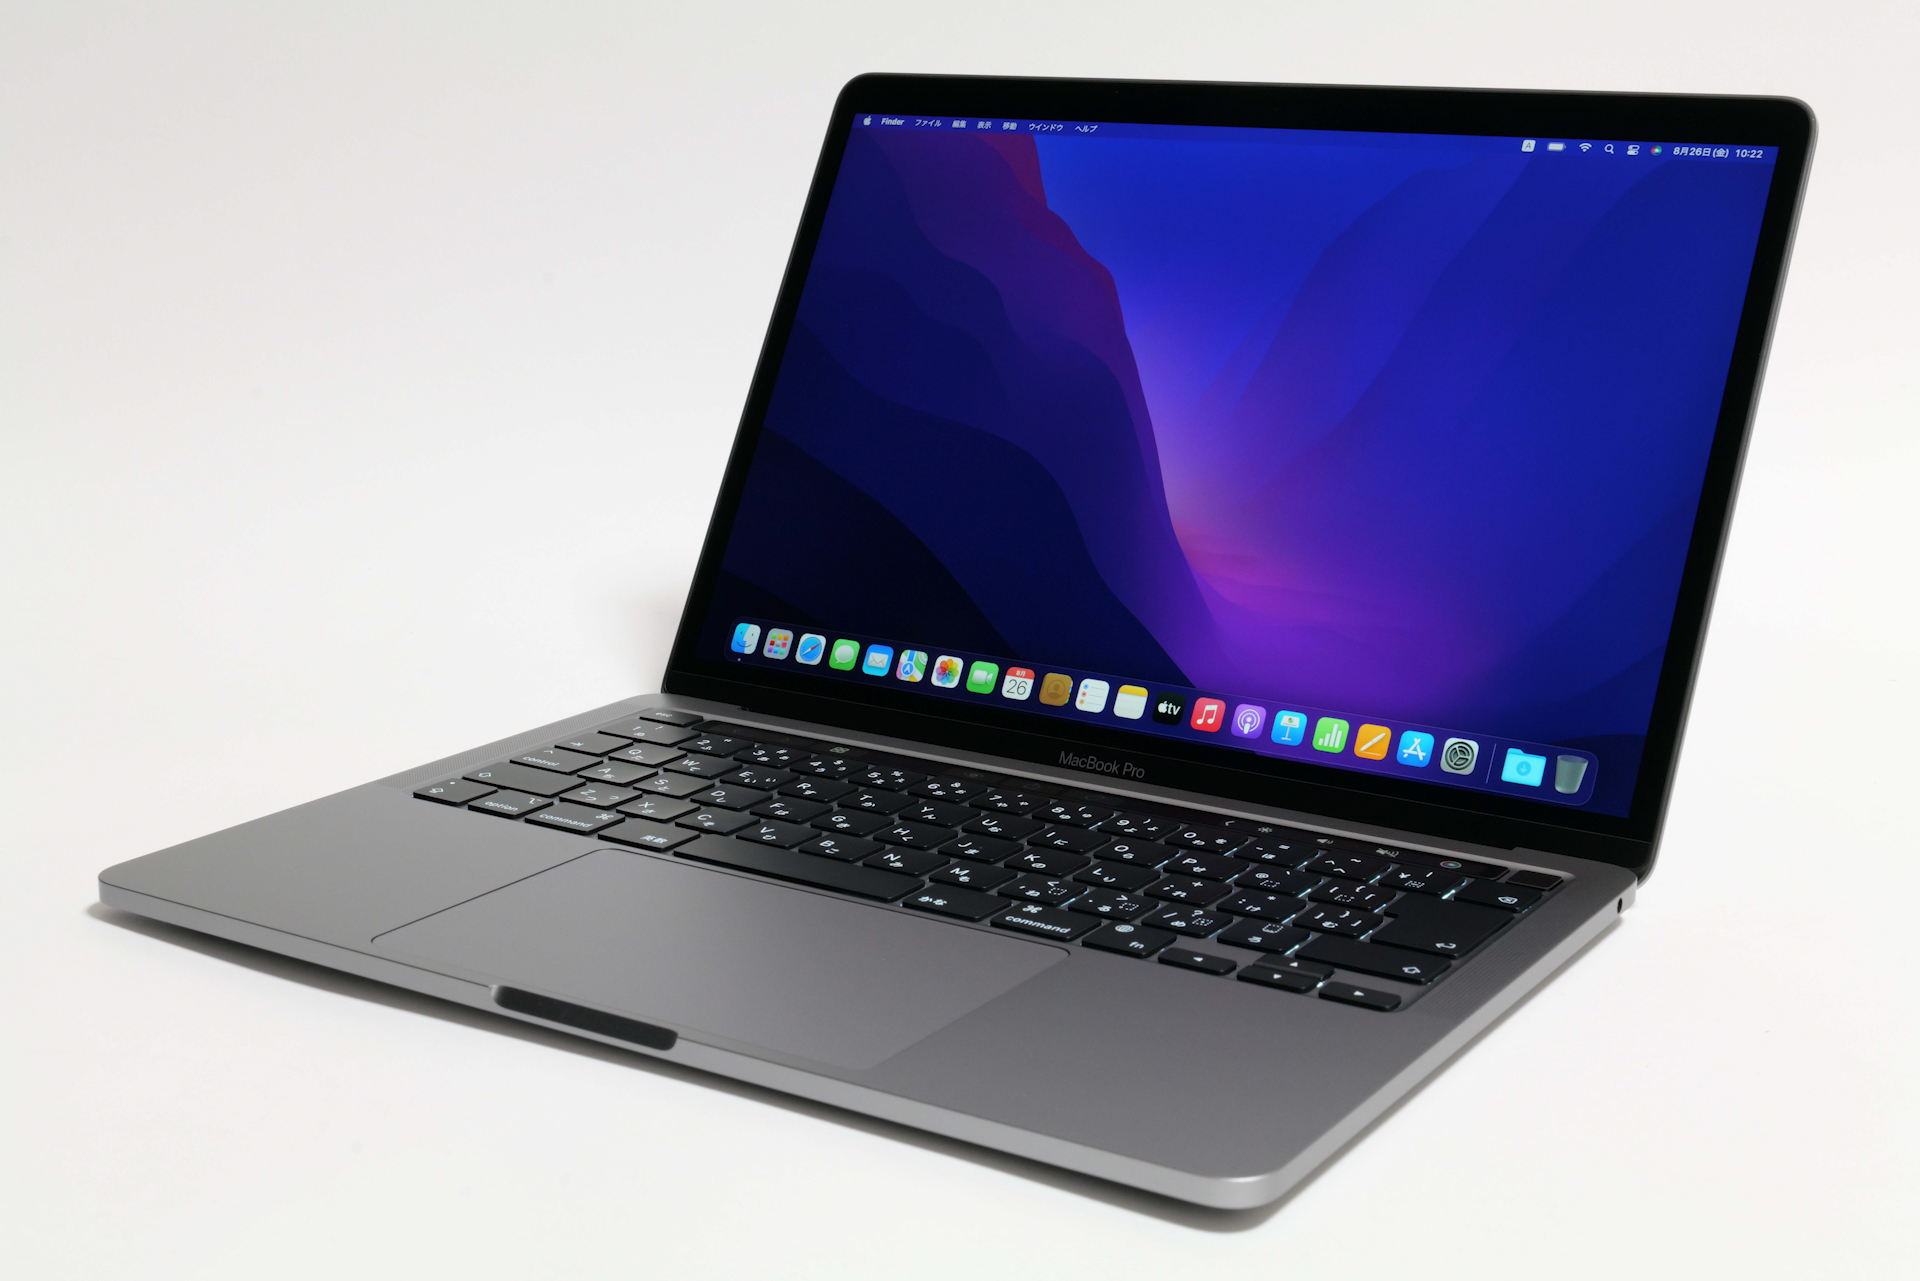 Hothotレビュー】名より実を取ったM2 MacBook Pro 13インチ版。性能を